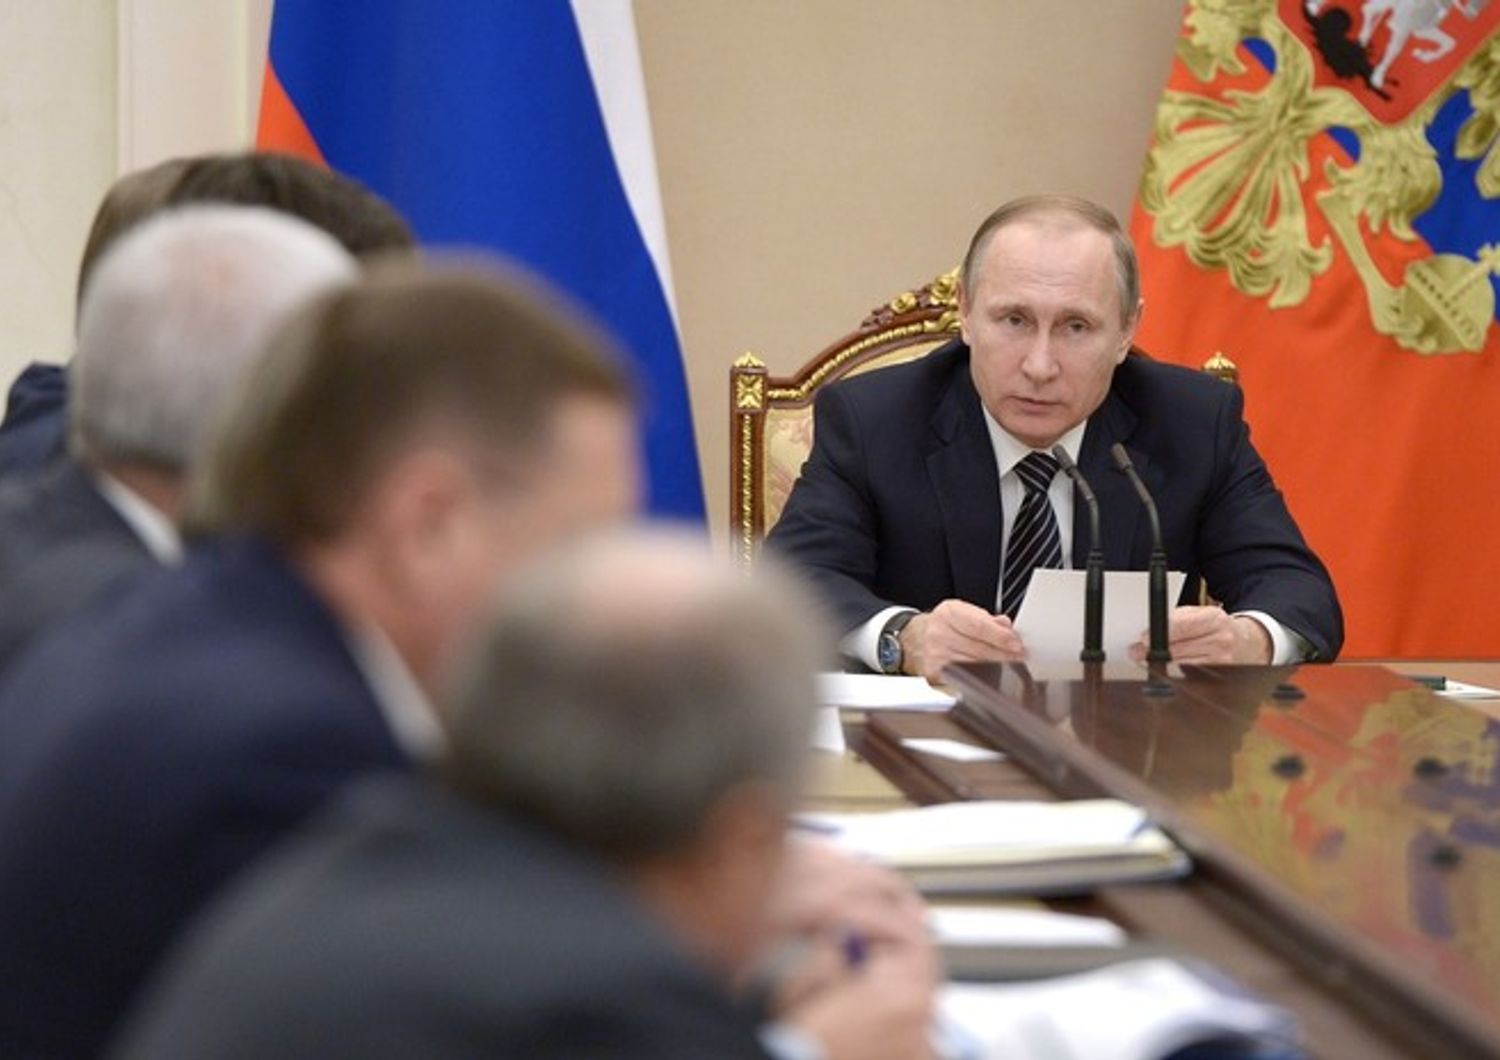 &nbsp;Mosca Putin riunione petrolio - afp